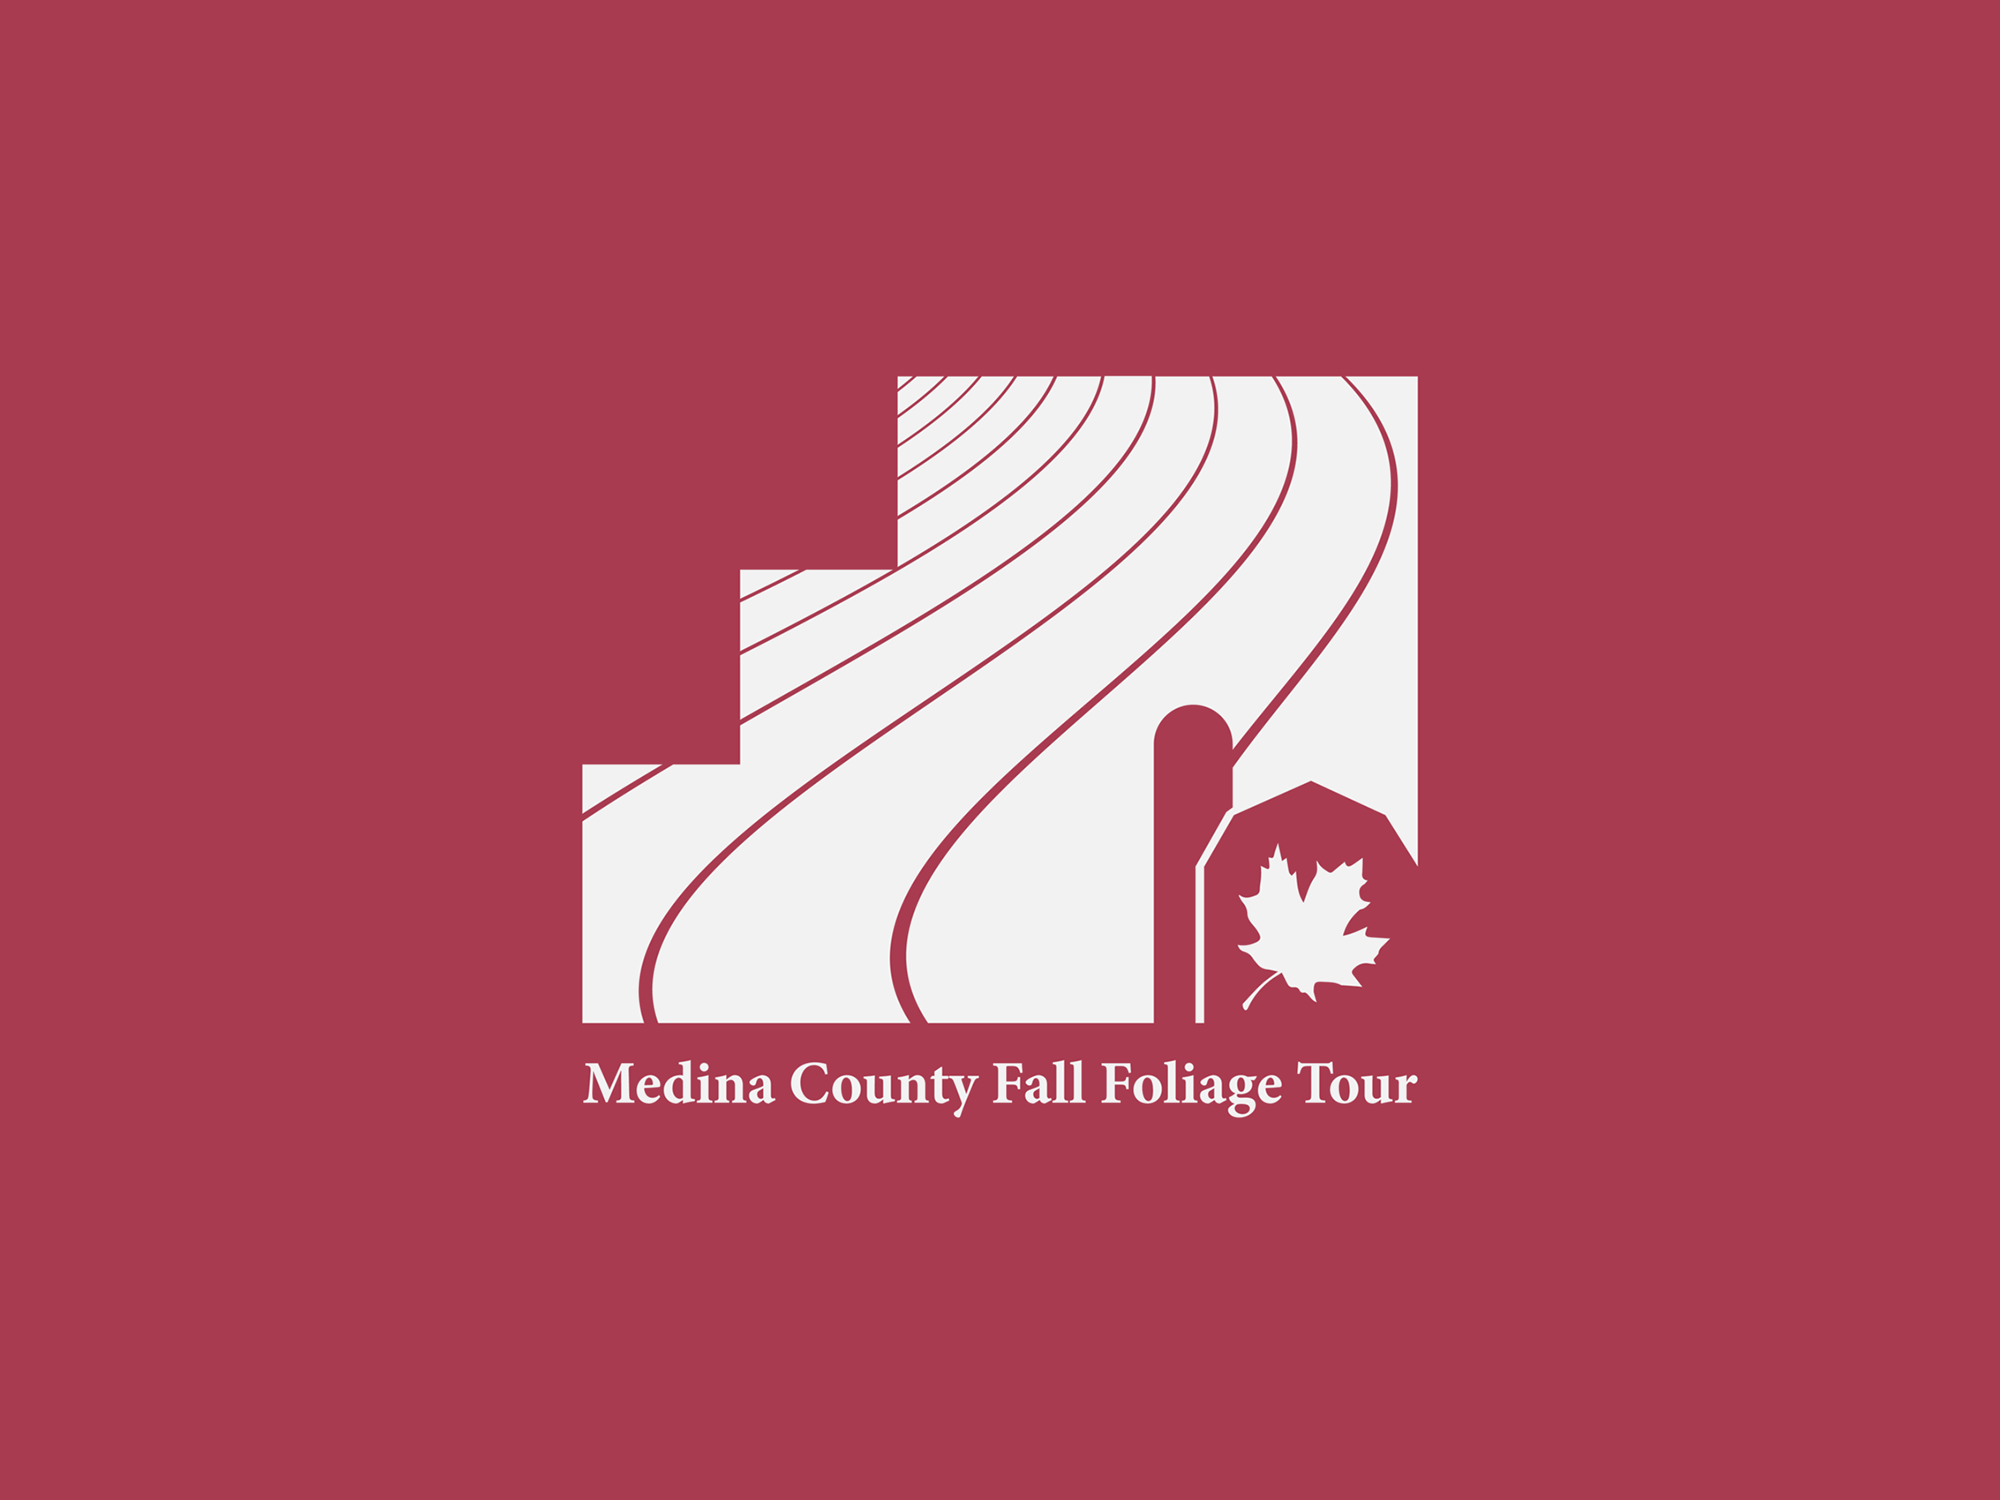 Design Process Medina County Fall Foliage Tour